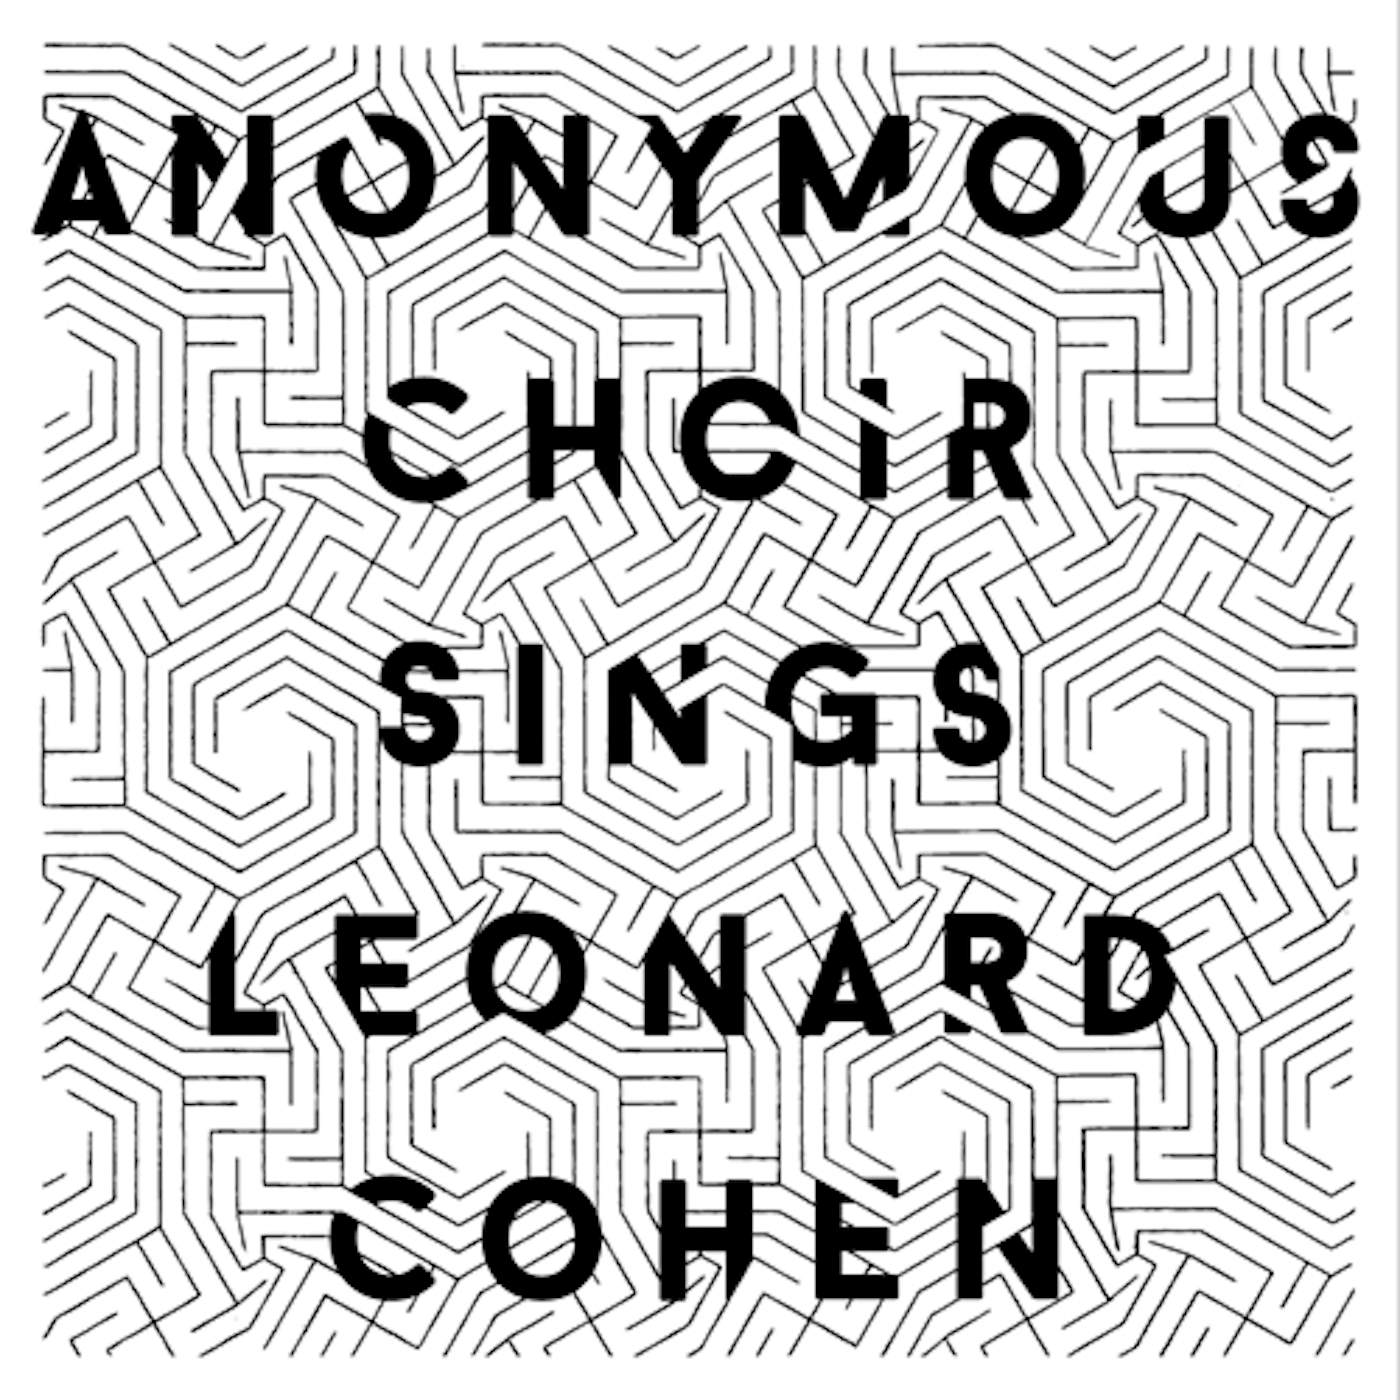 Anonymous Choir Sings Leonard Cohen Vinyl Record